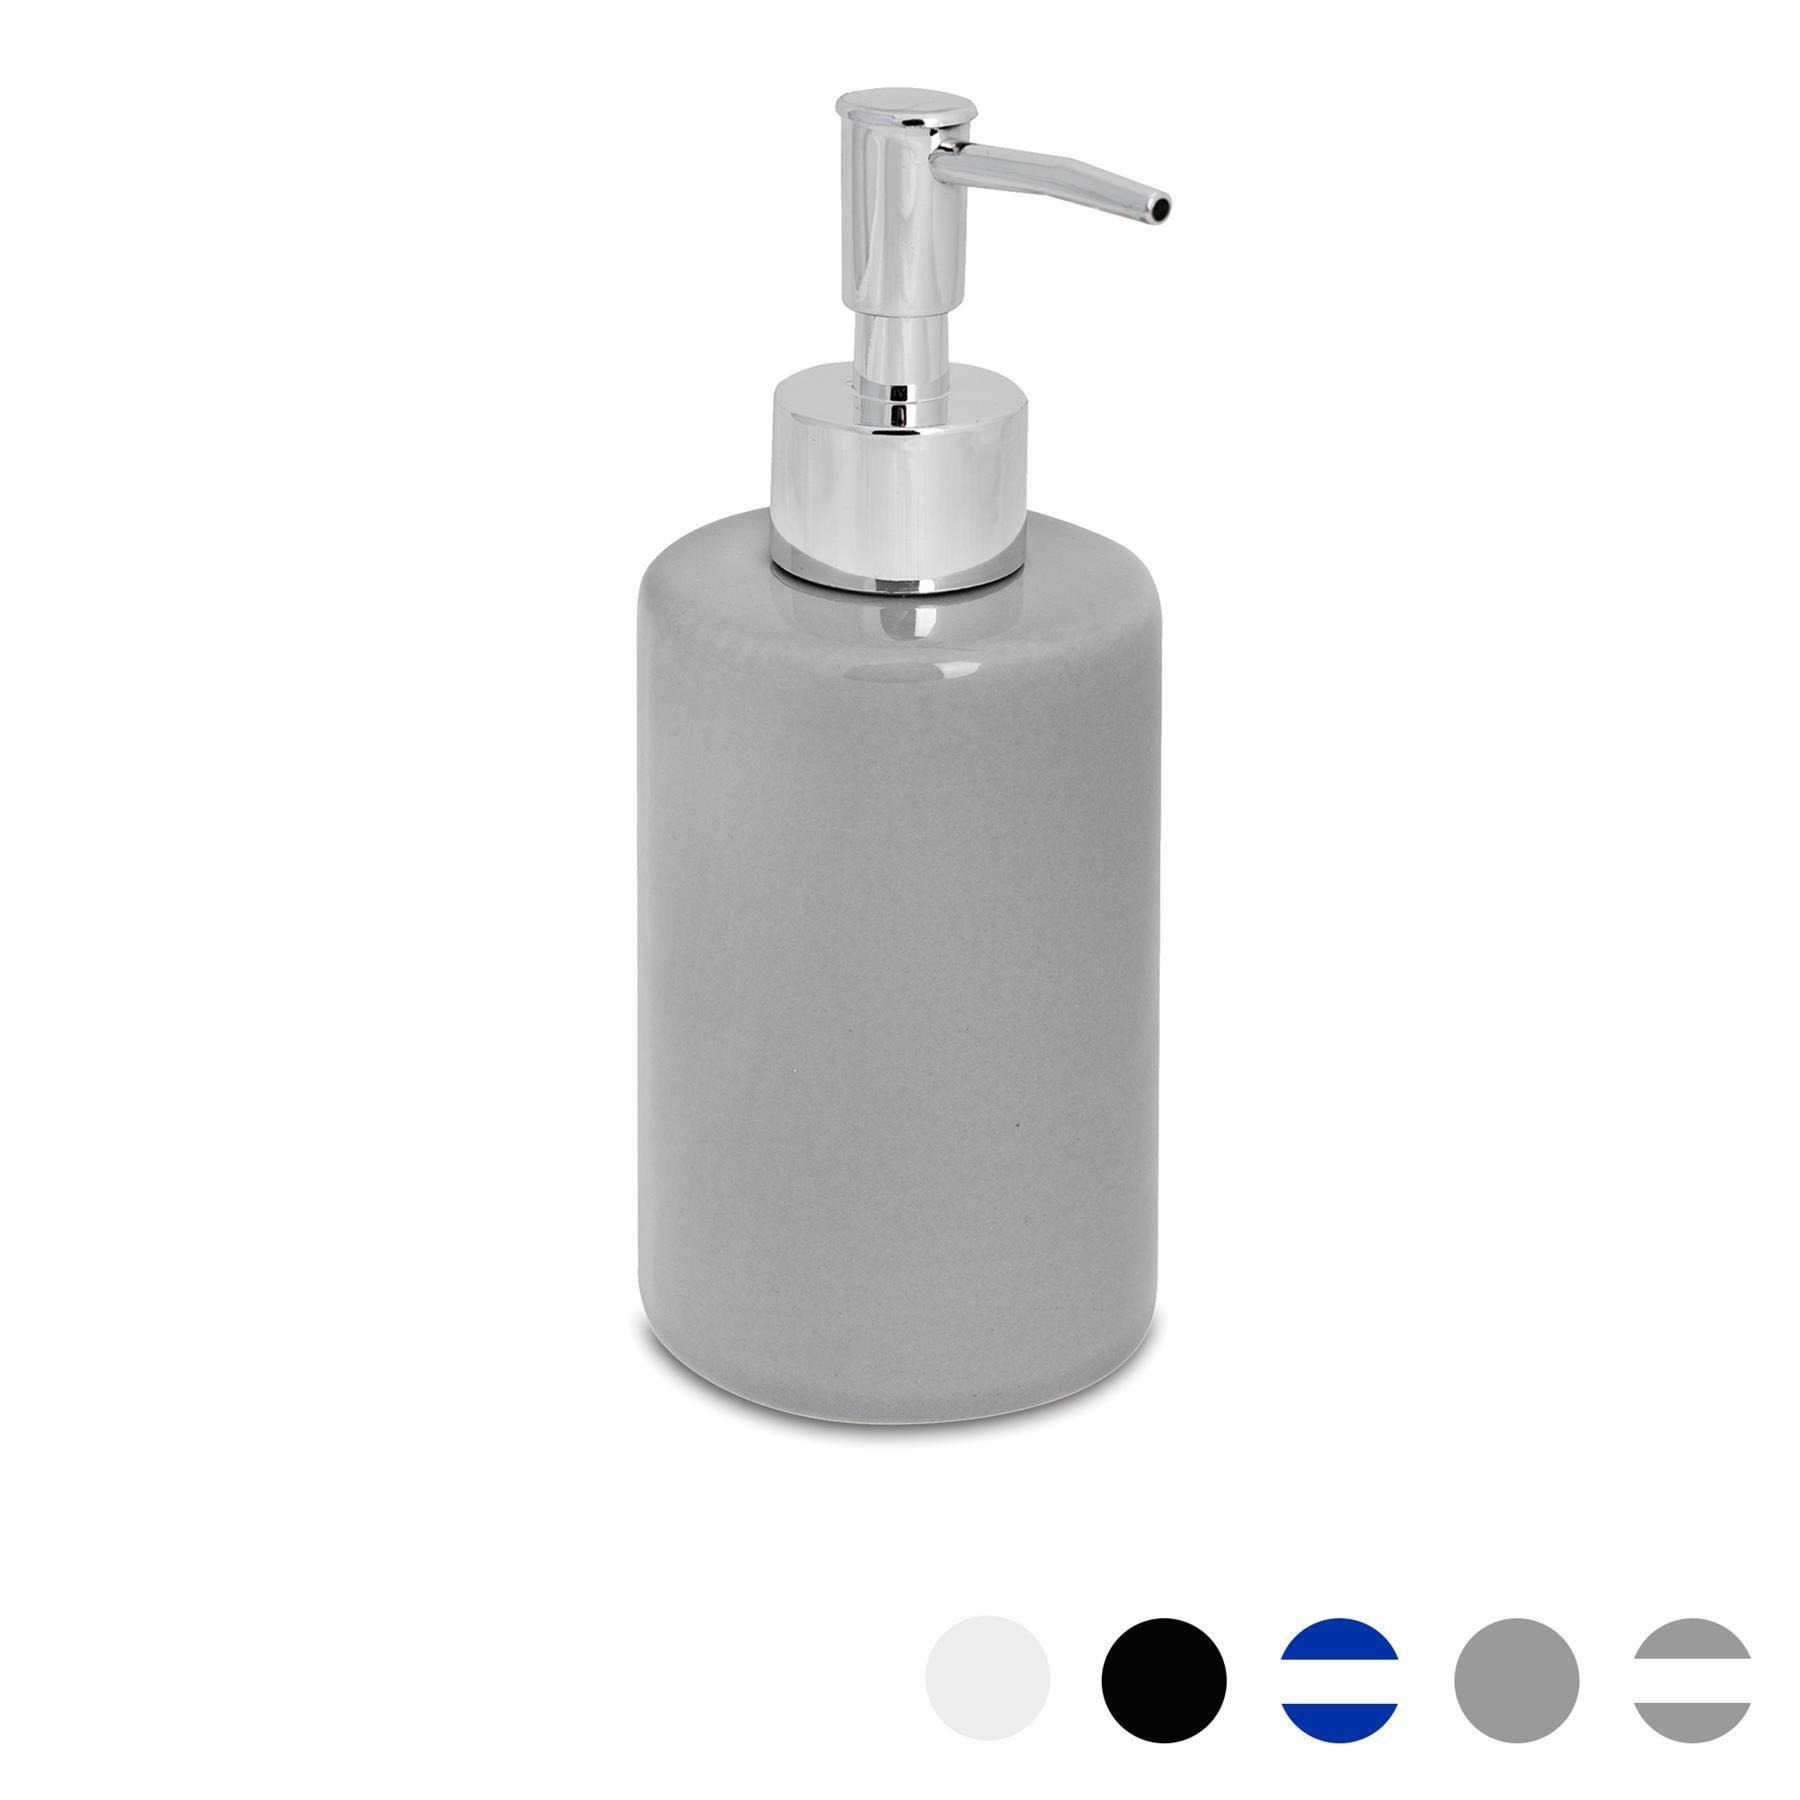 Ceramic Soap Dispenser 280ml - image 1